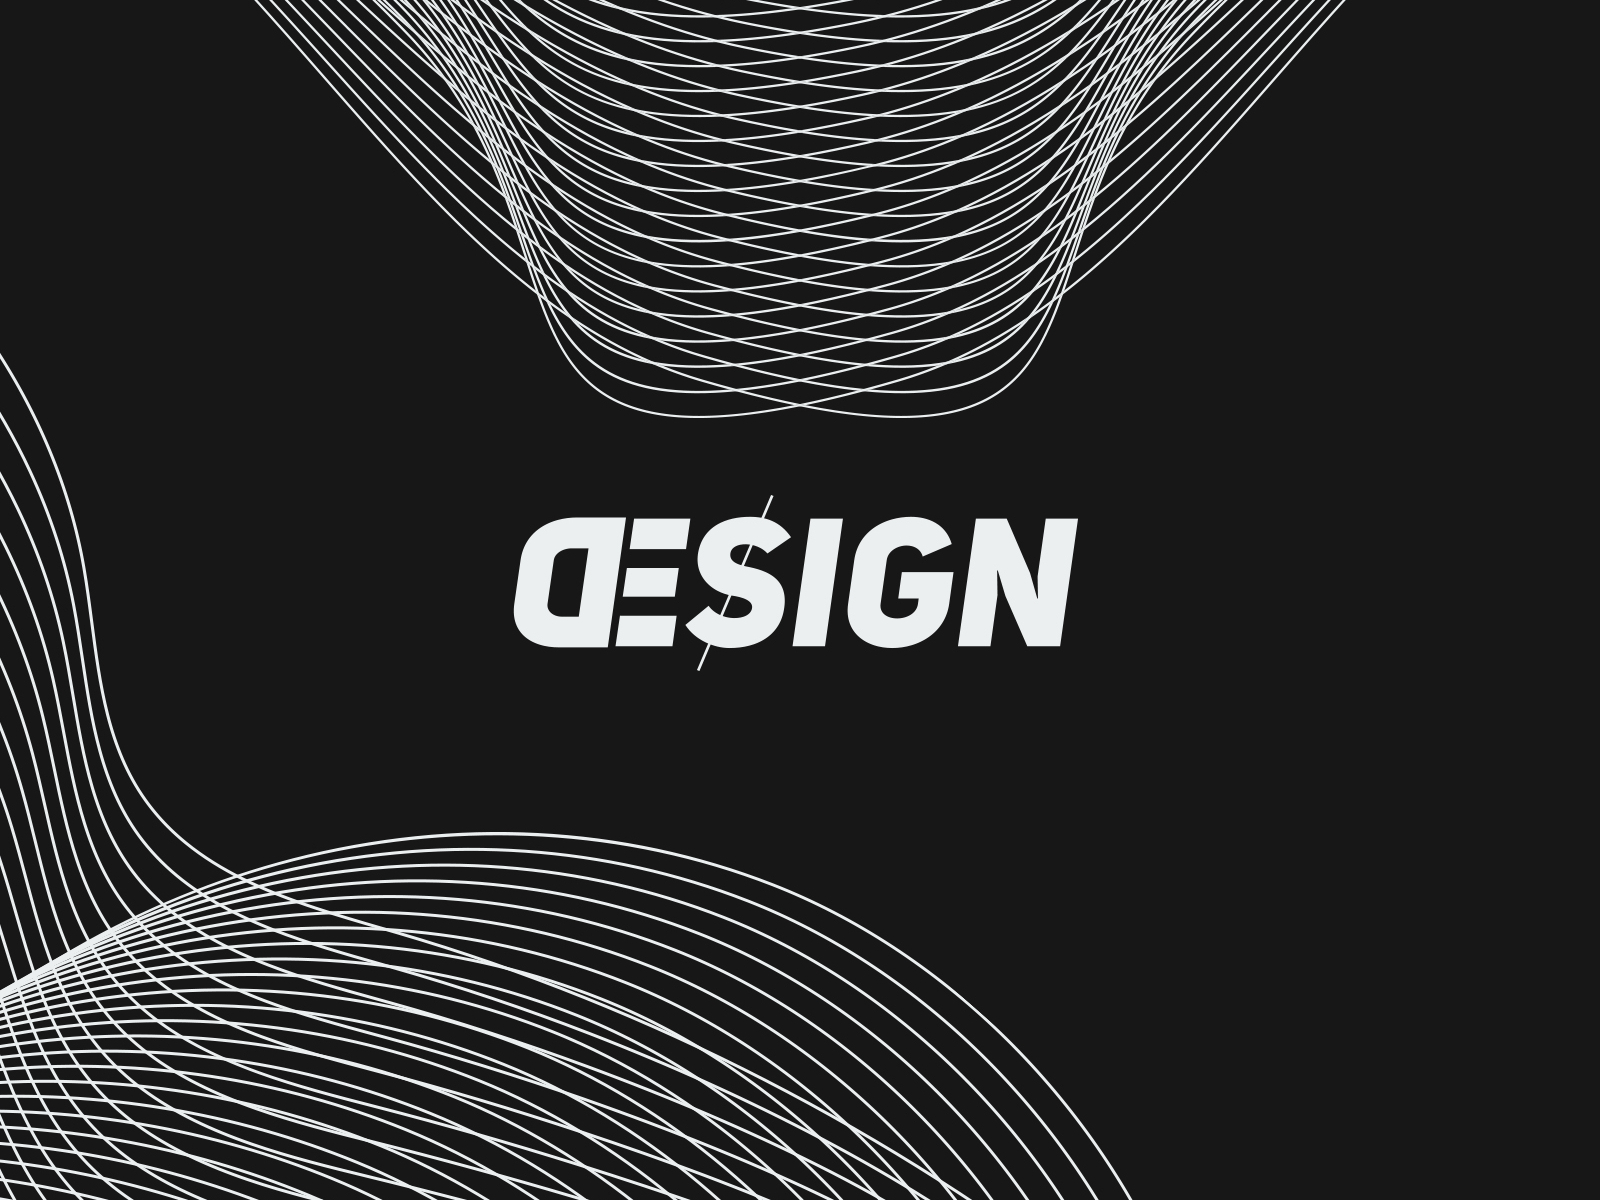 Design Inspiration - Typography by Shai Krish on Dribbble